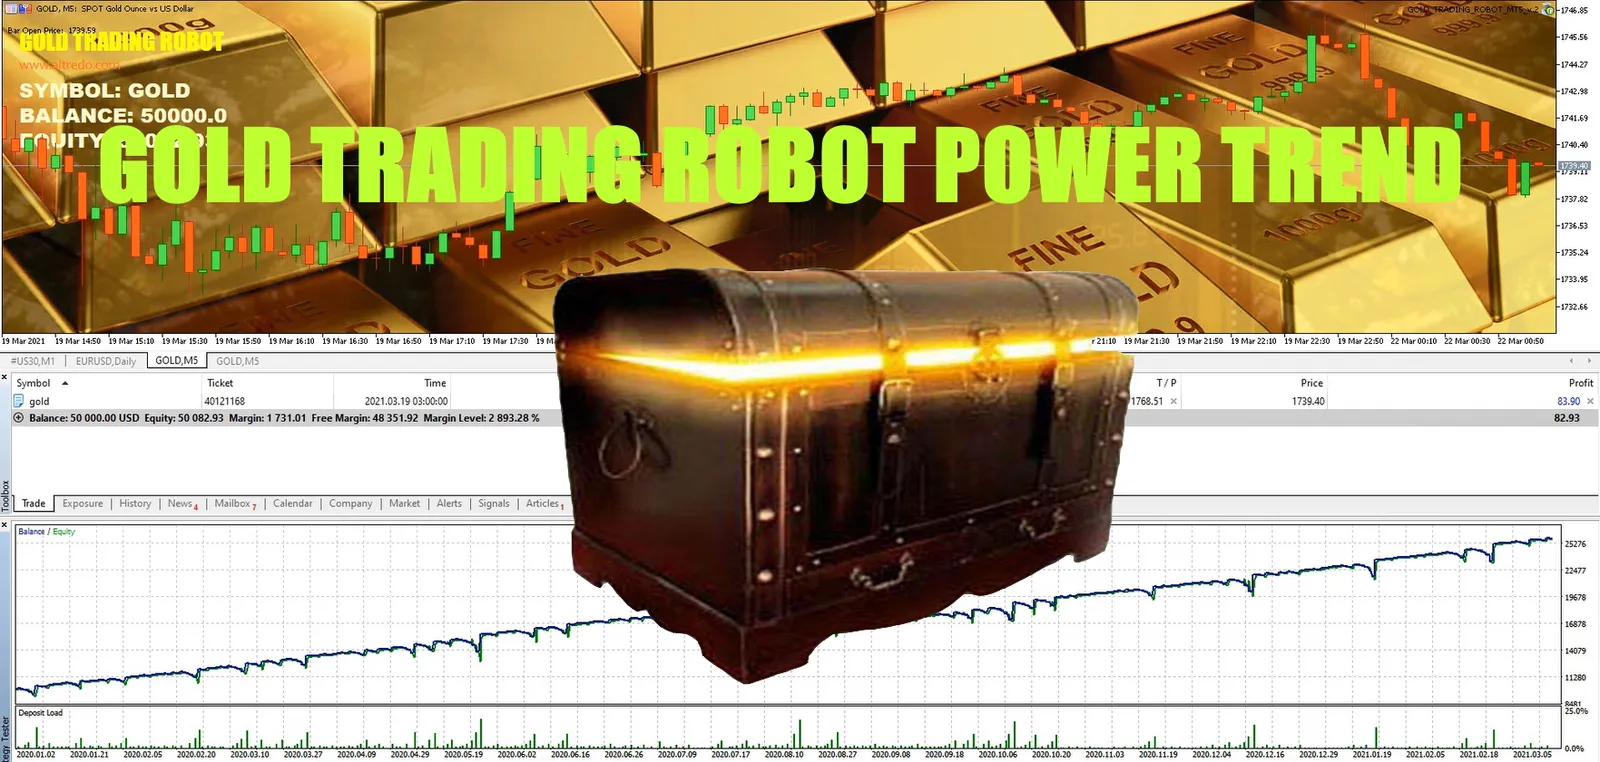 Gold Trading Robot Power Trend For Metatrader 5 (MT5)